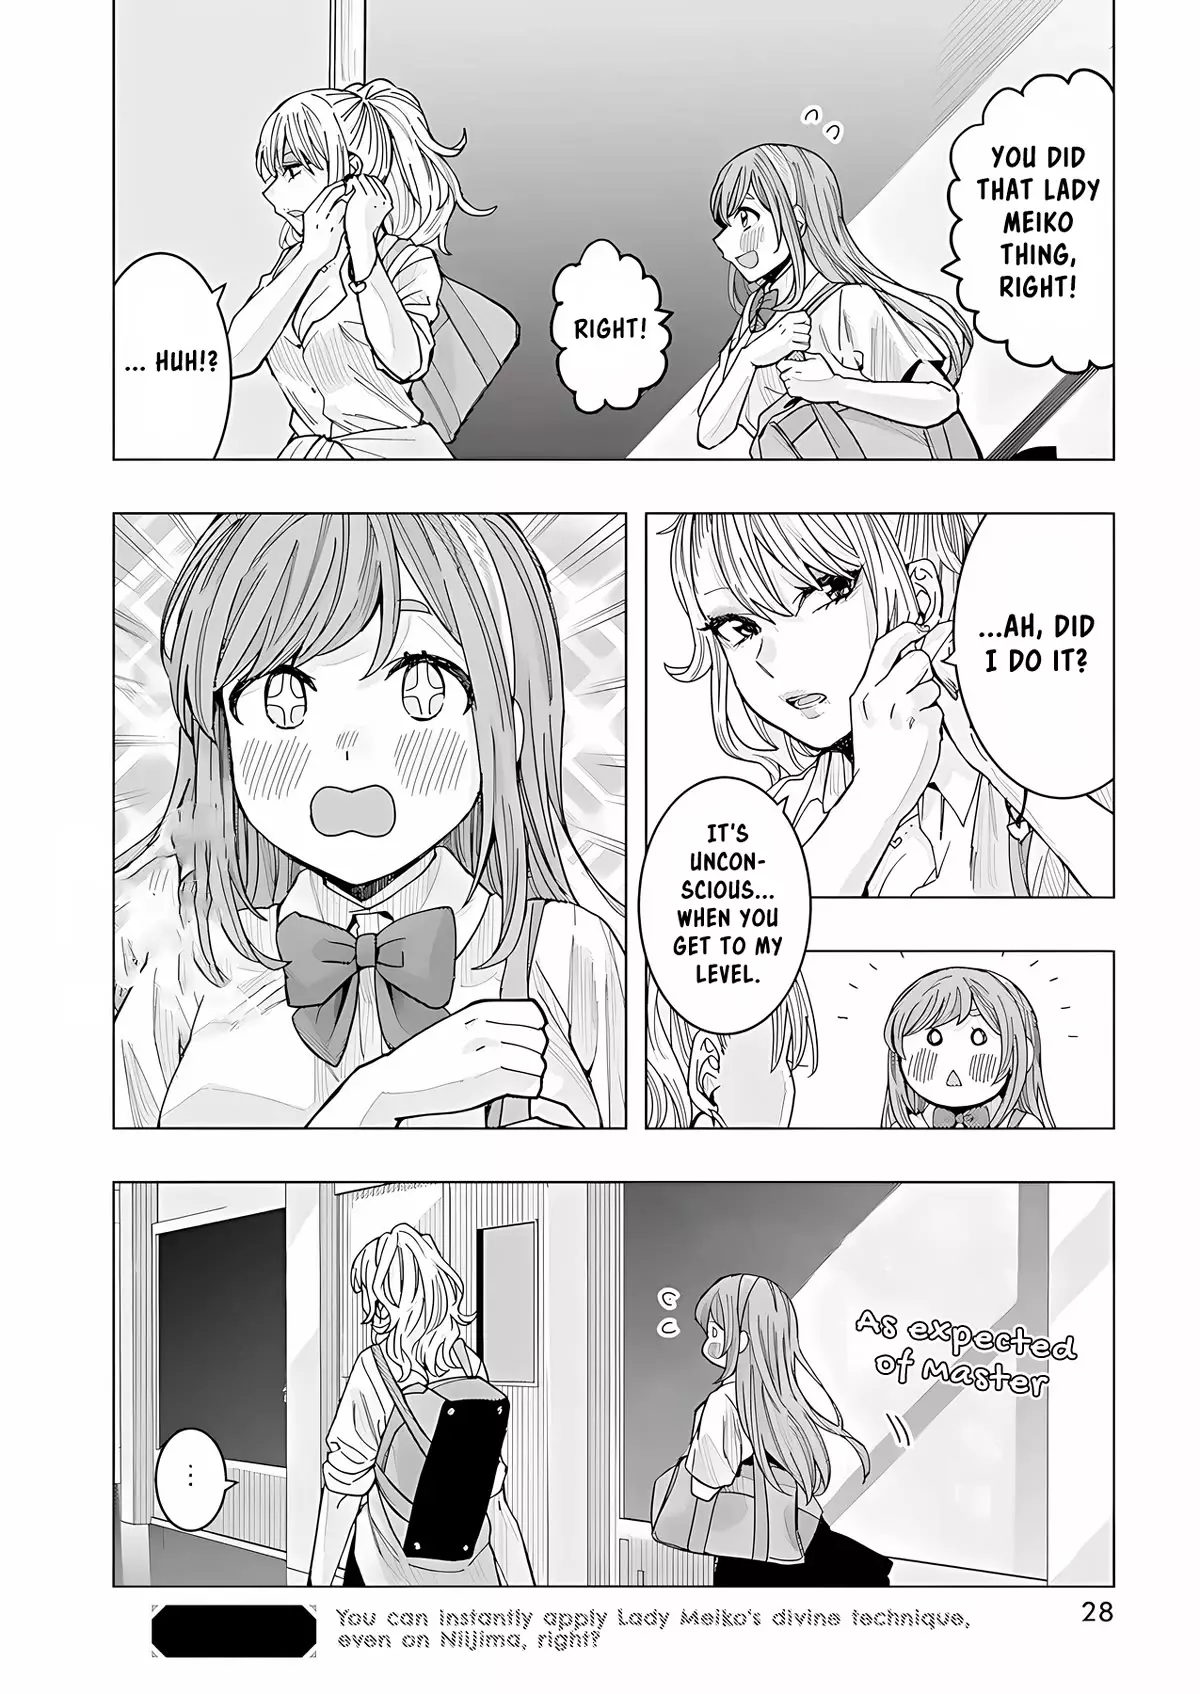 "nobukuni-San" Does She Like Me? - 25 page 16-4cb3ee09